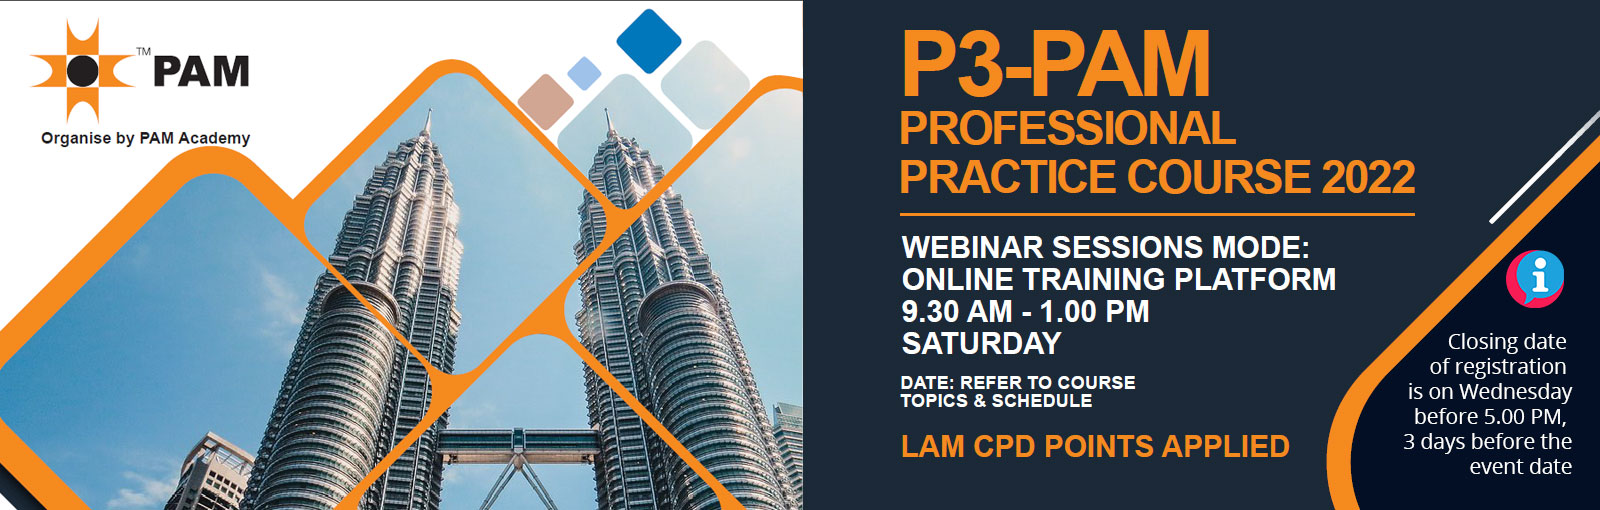 P3 - PAM Professional Practice Course 2022